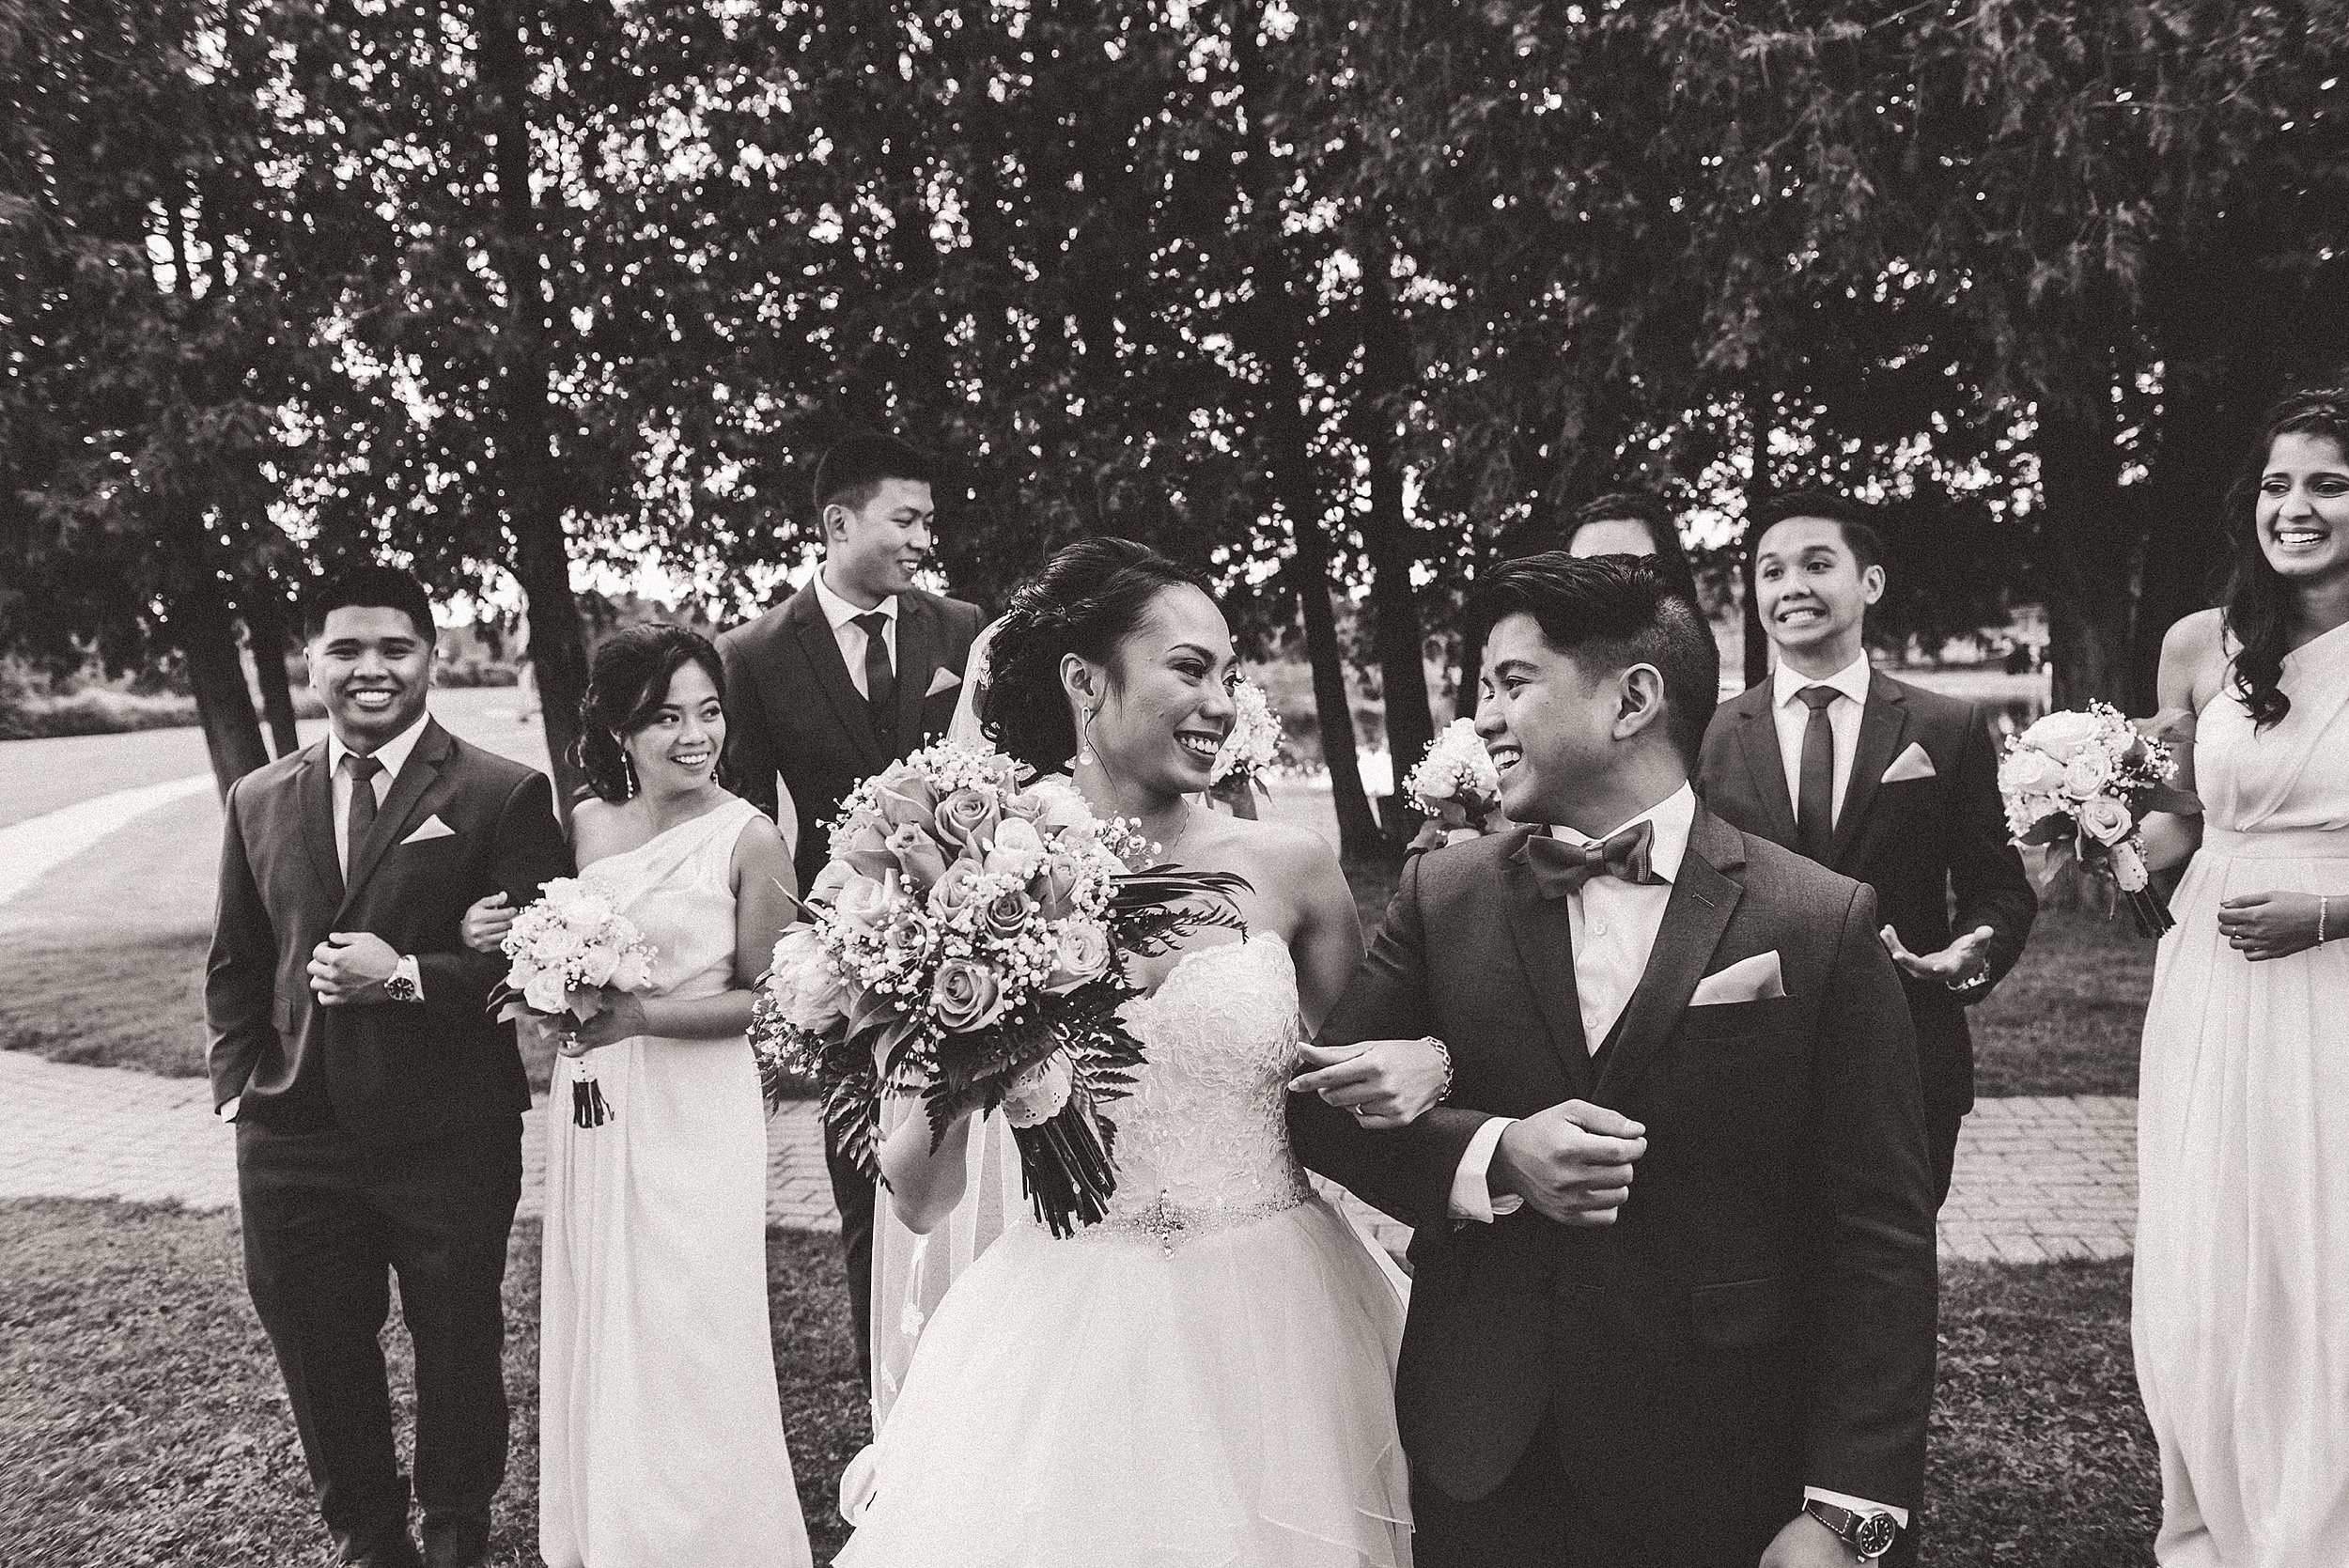 Ali and Batoul Photography - light, airy, indie documentary Ottawa wedding photographer_0069.jpg